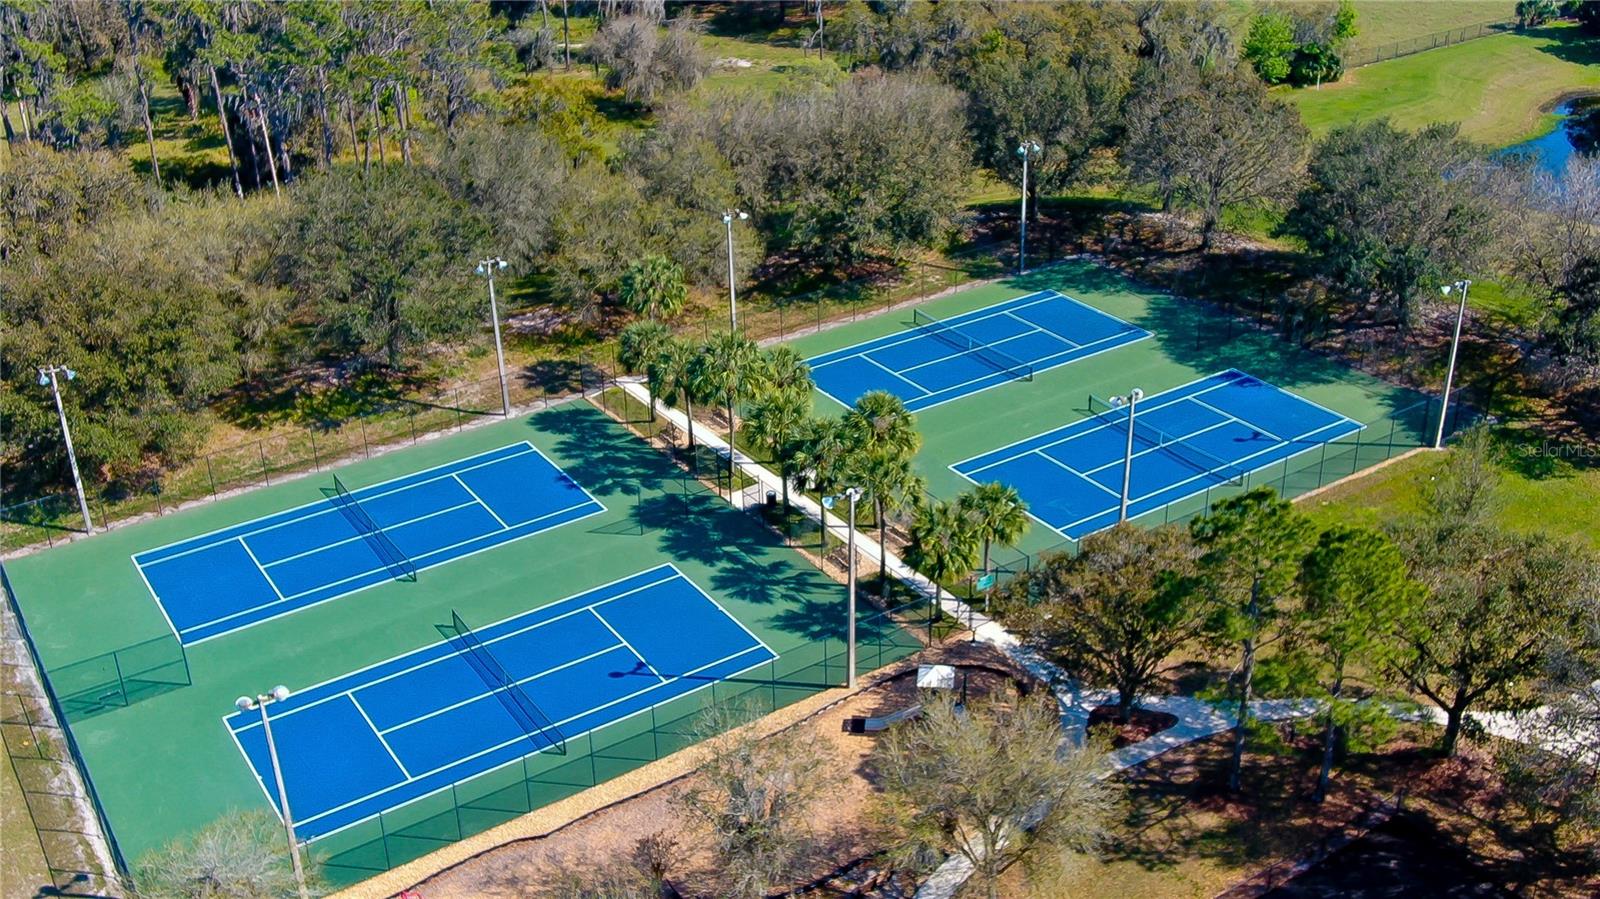 Community tennis courts!